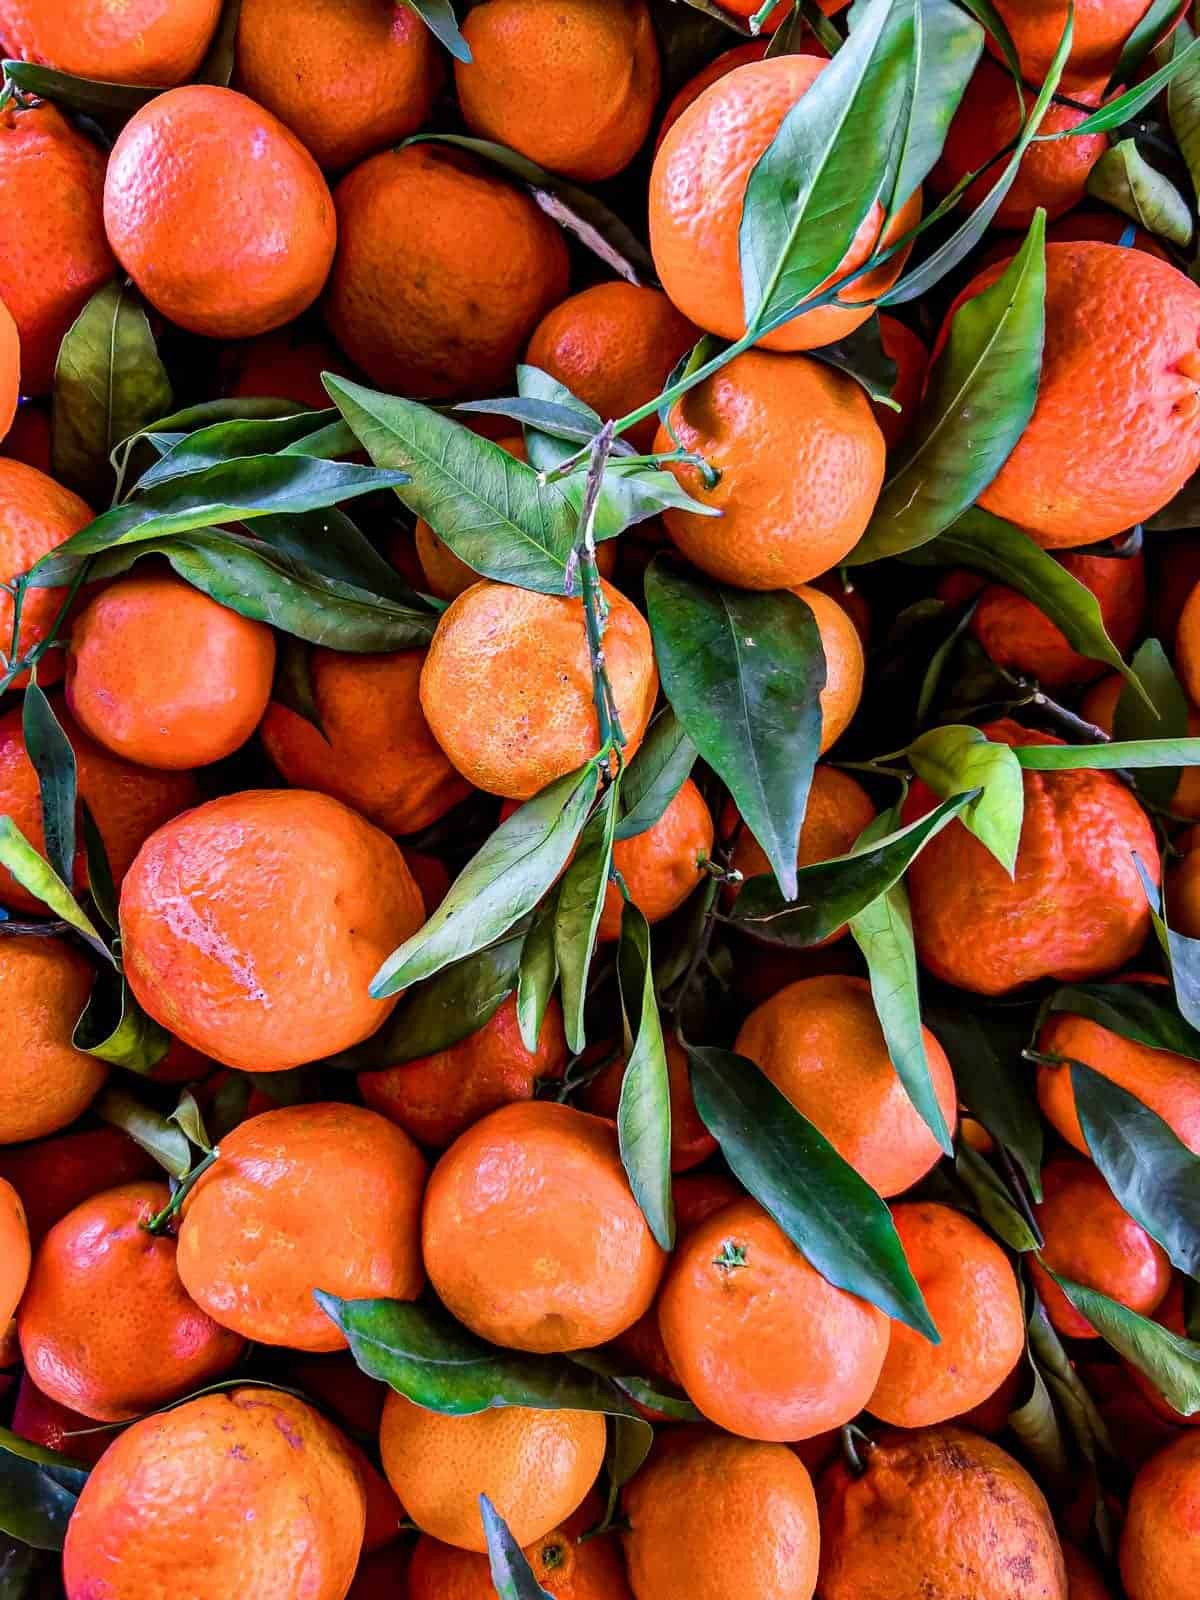 Fresh oranges for a Fennel & Orange Salad